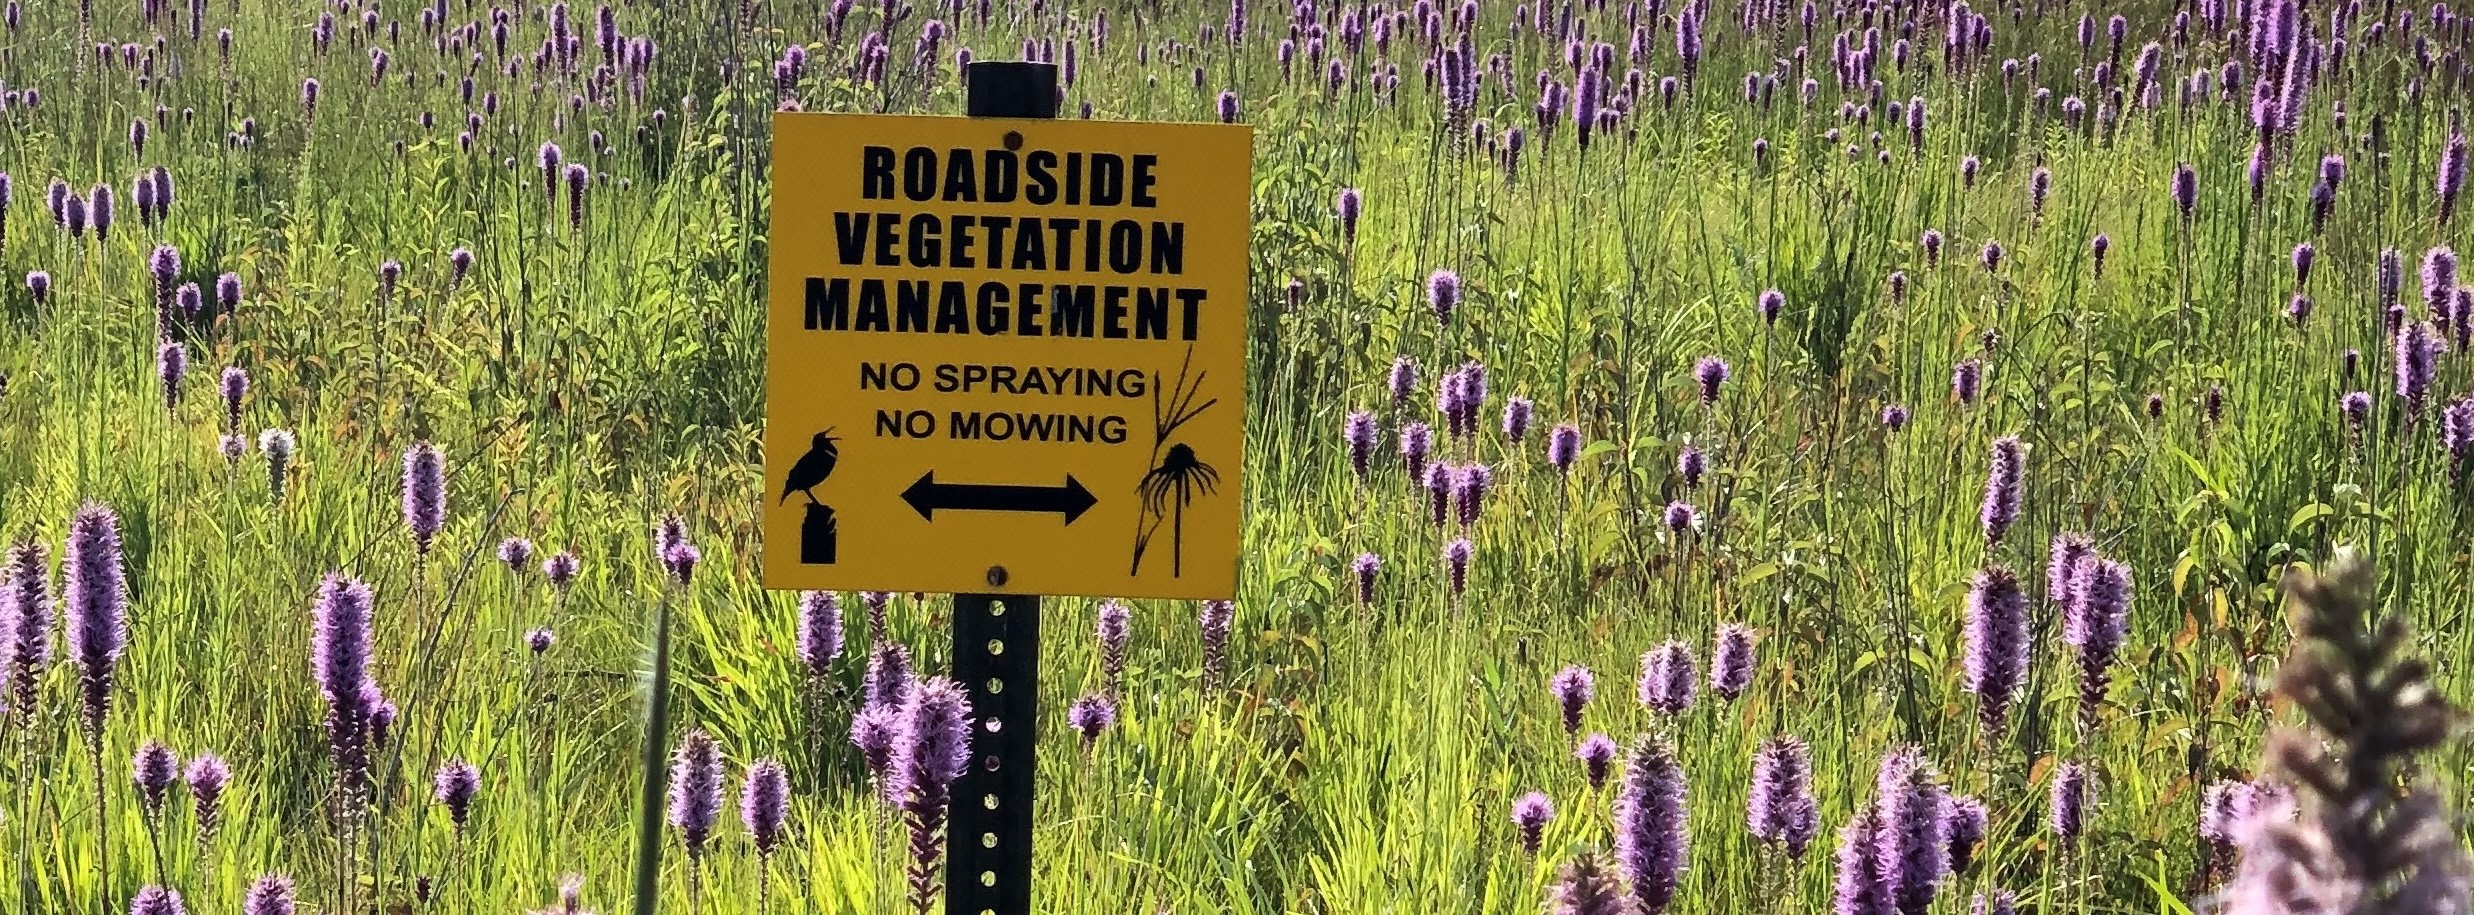 Roadside Vegetation Management sign in prairie planting